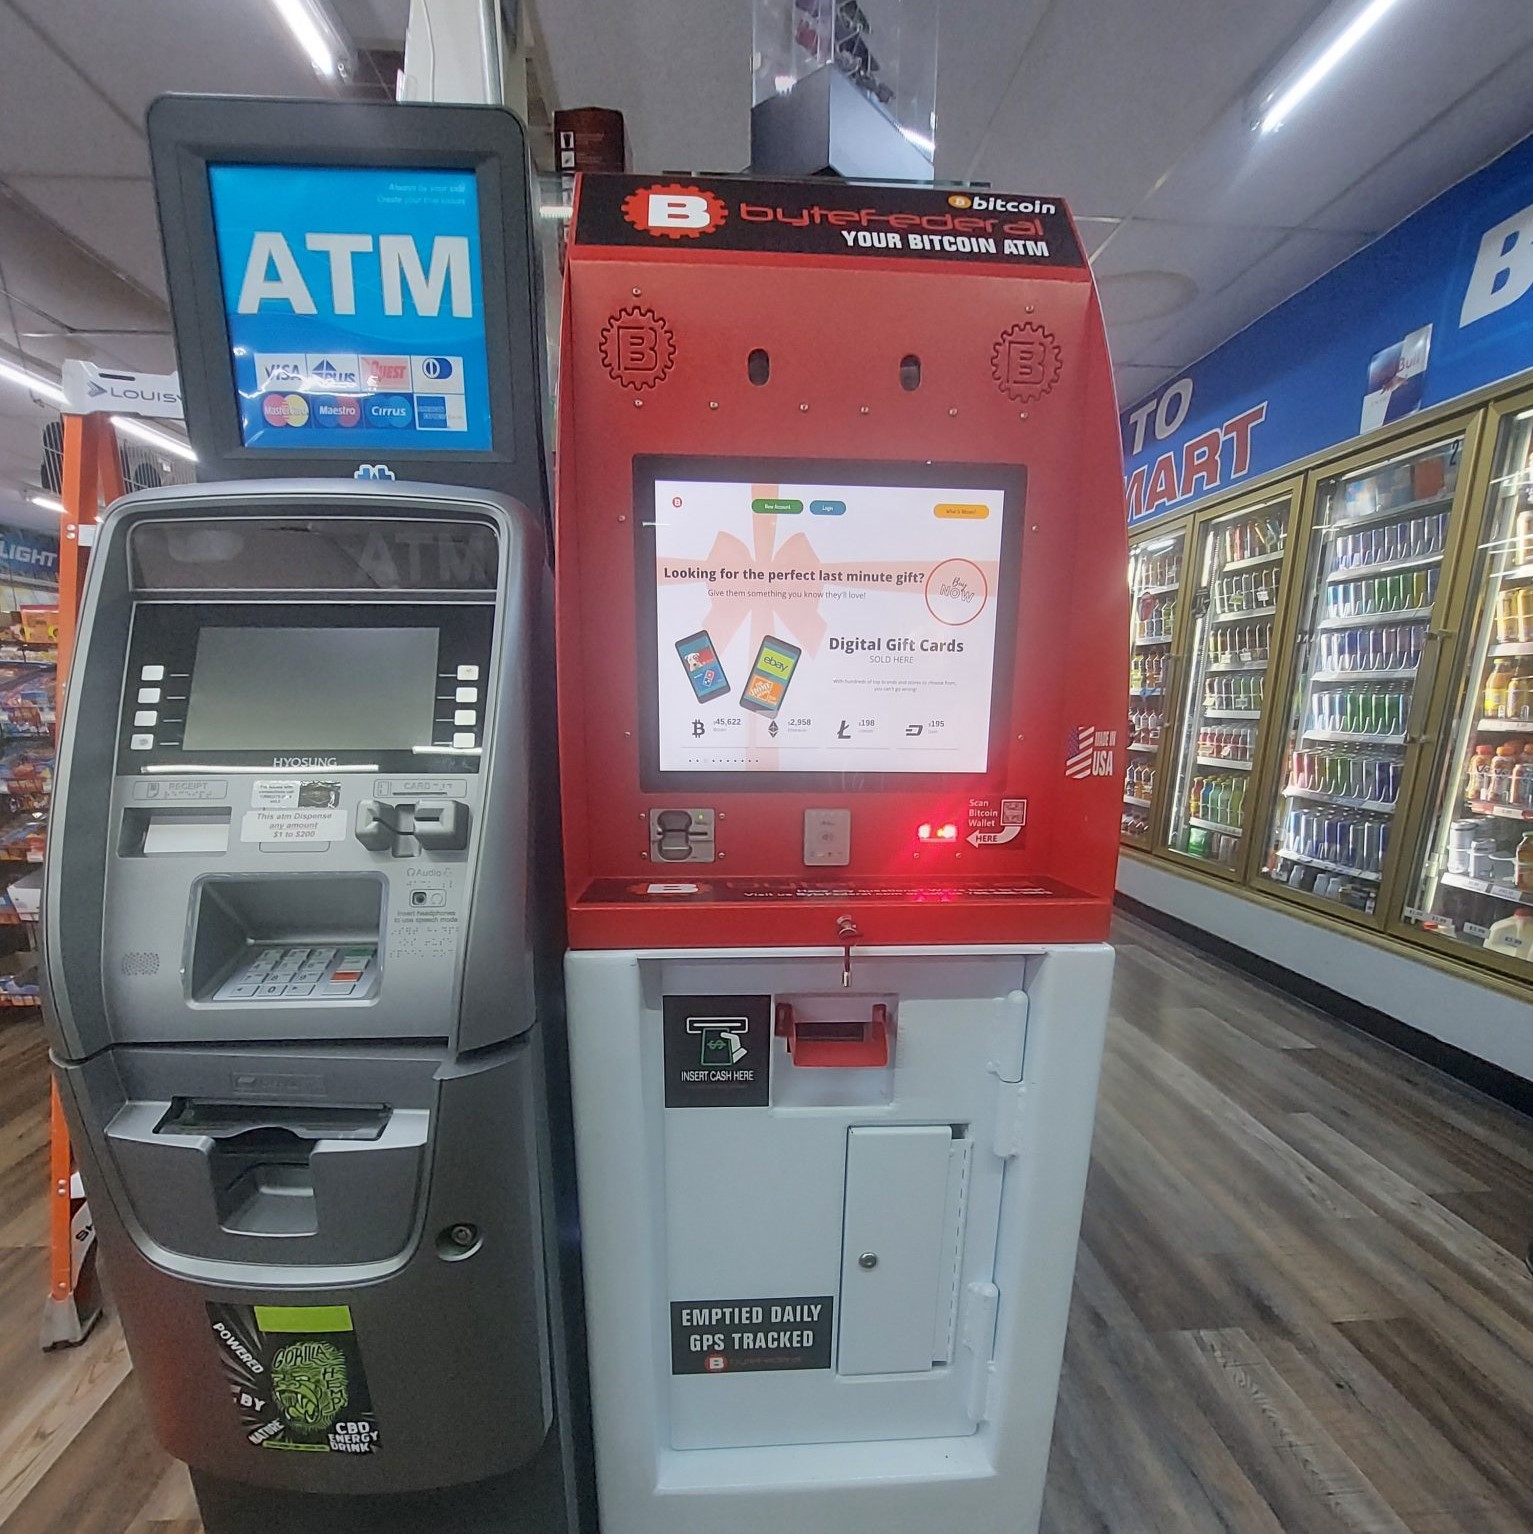 ATM image.